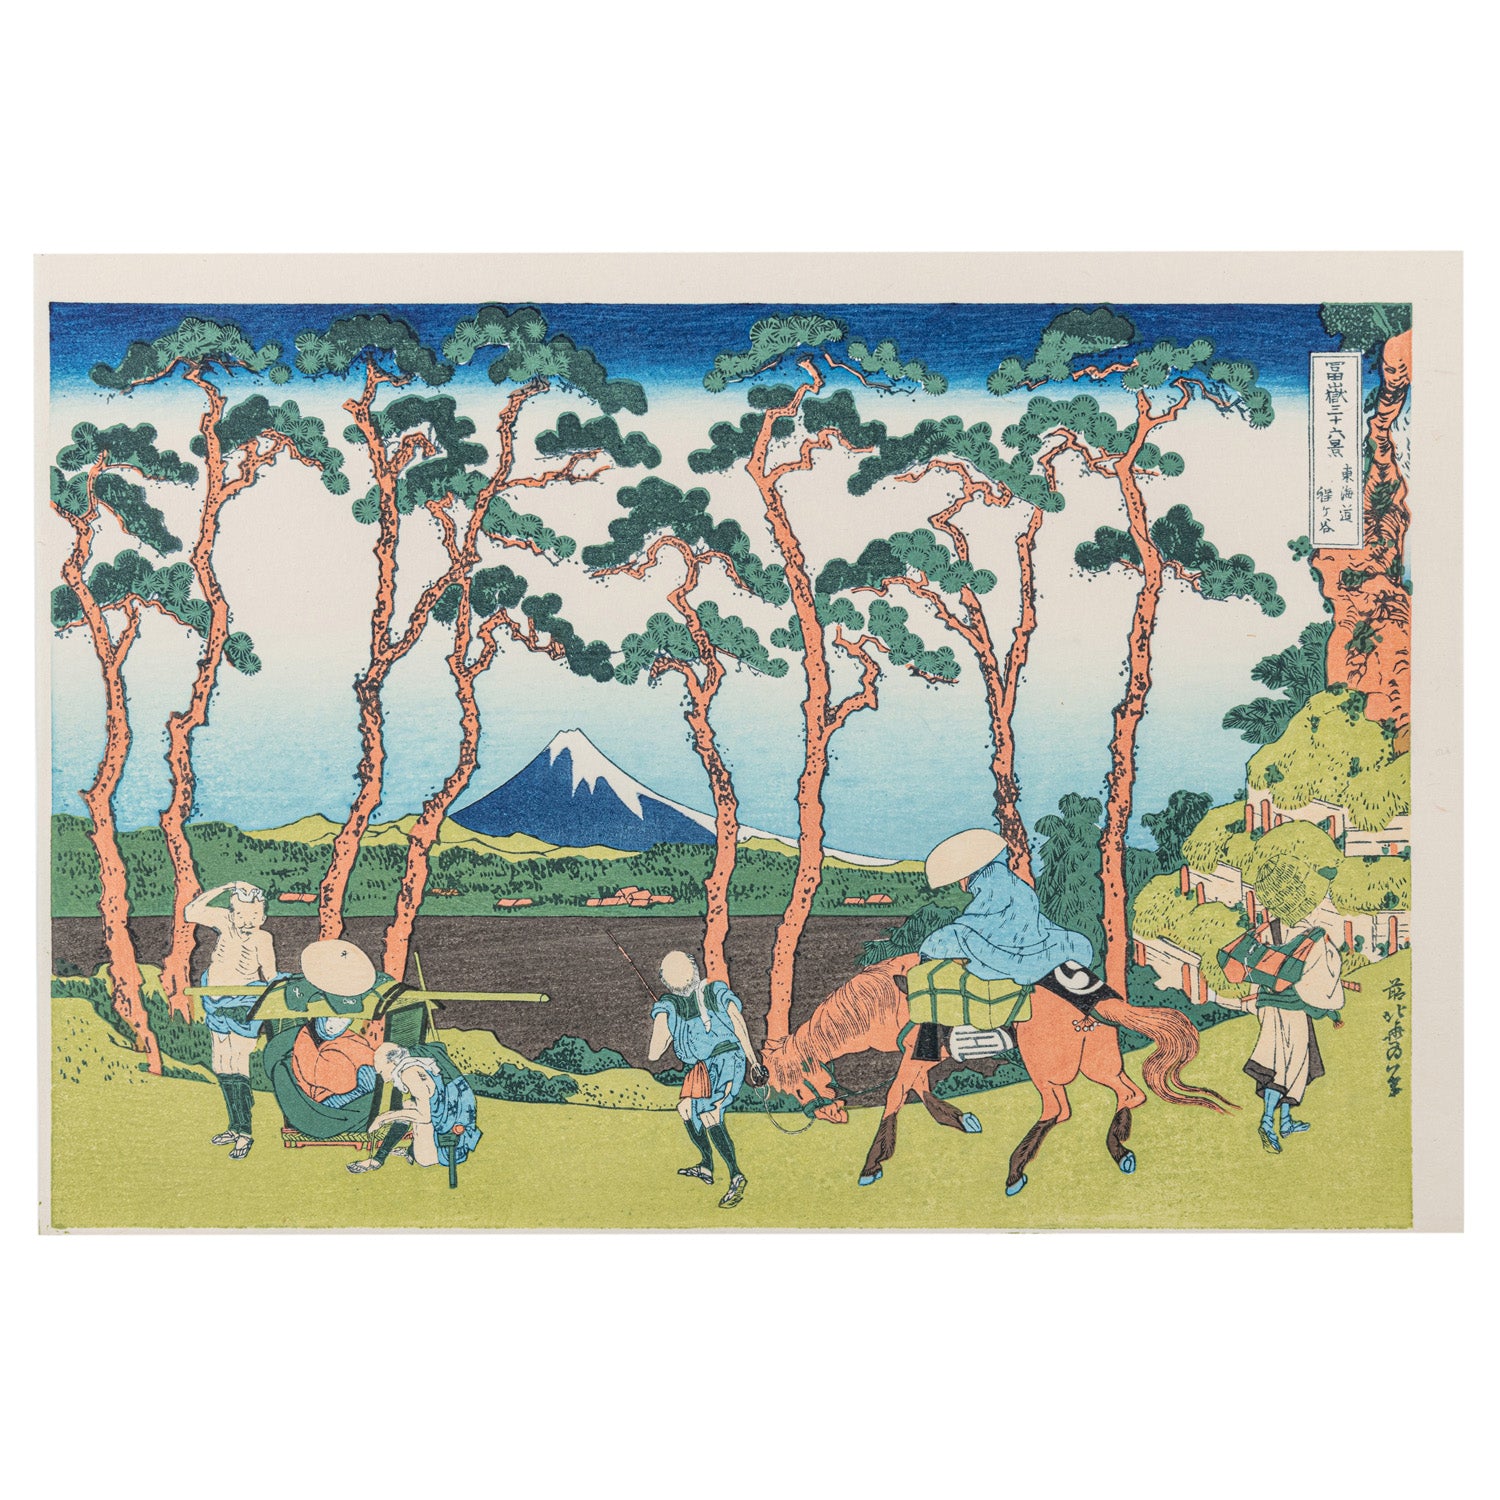 Hodogaya on Tokaido Japanese Woodblock Print